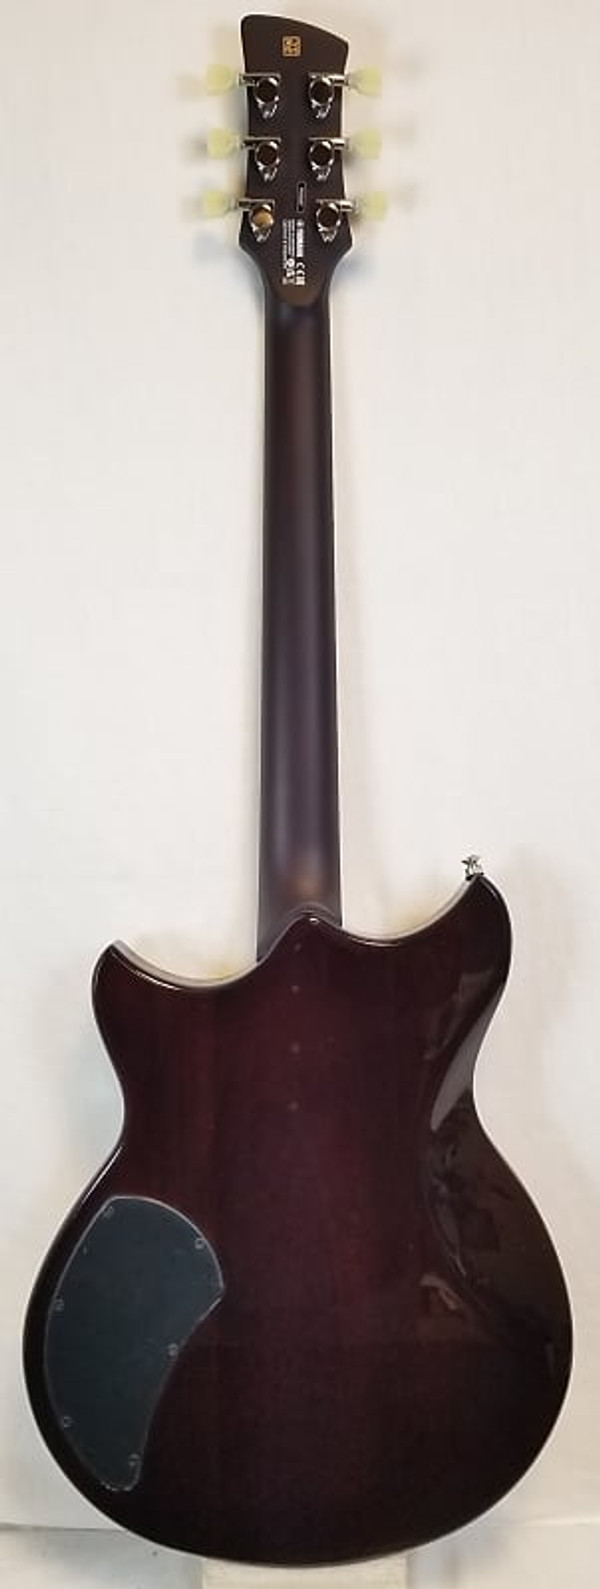 Yamaha RSS02T Revstar Standard Electric Guitar, 2 P90 Style Pickups, Hot Merlot, W/ Bag